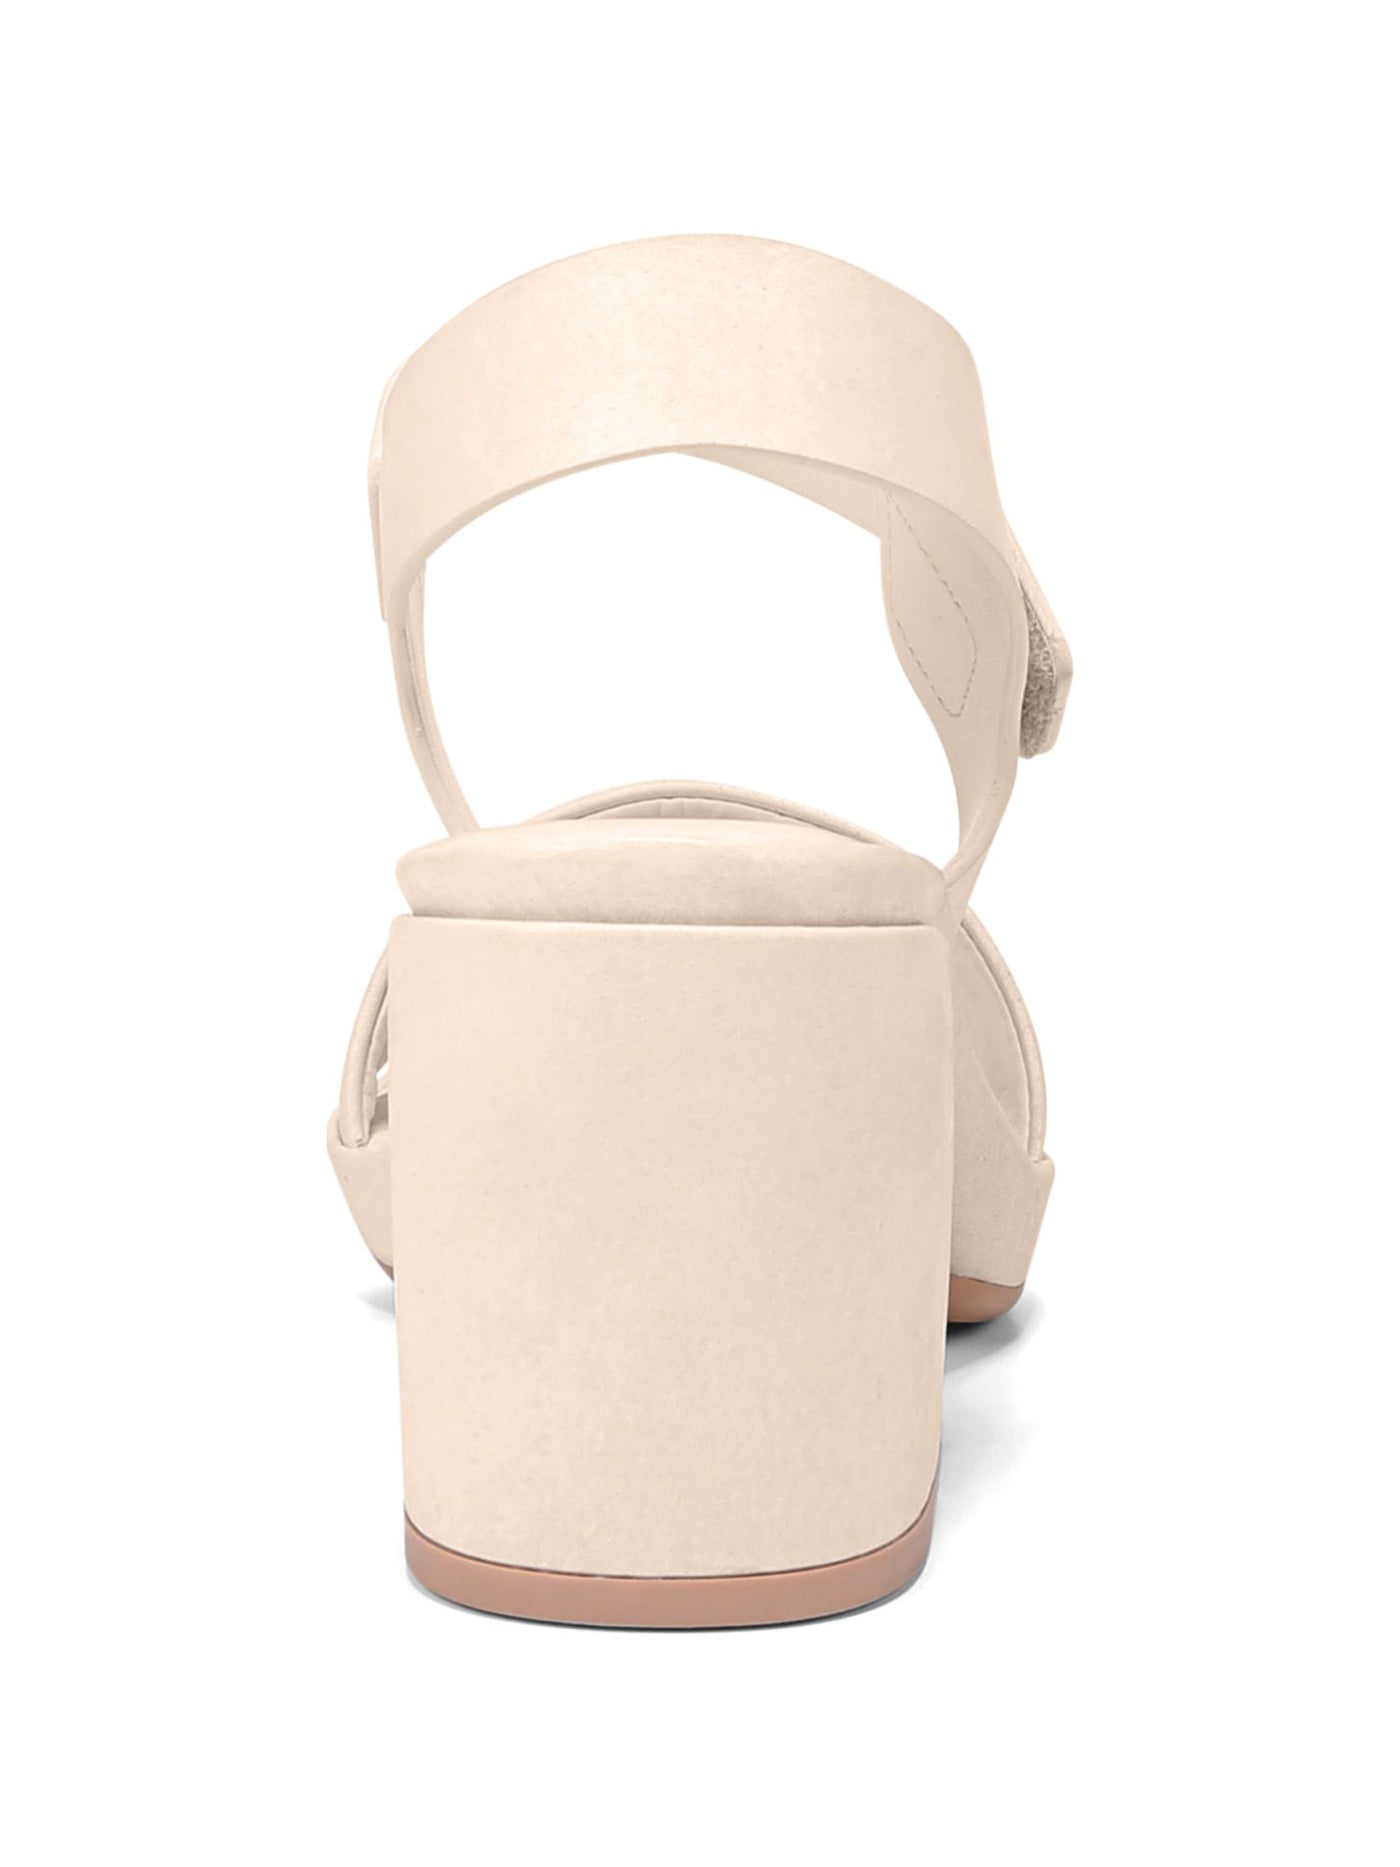 NATURALIZER Womens Ivory Flex Bottom Comfort Adjustable Genn-rise Round Toe Block Heel Leather Heeled Sandal 8 M